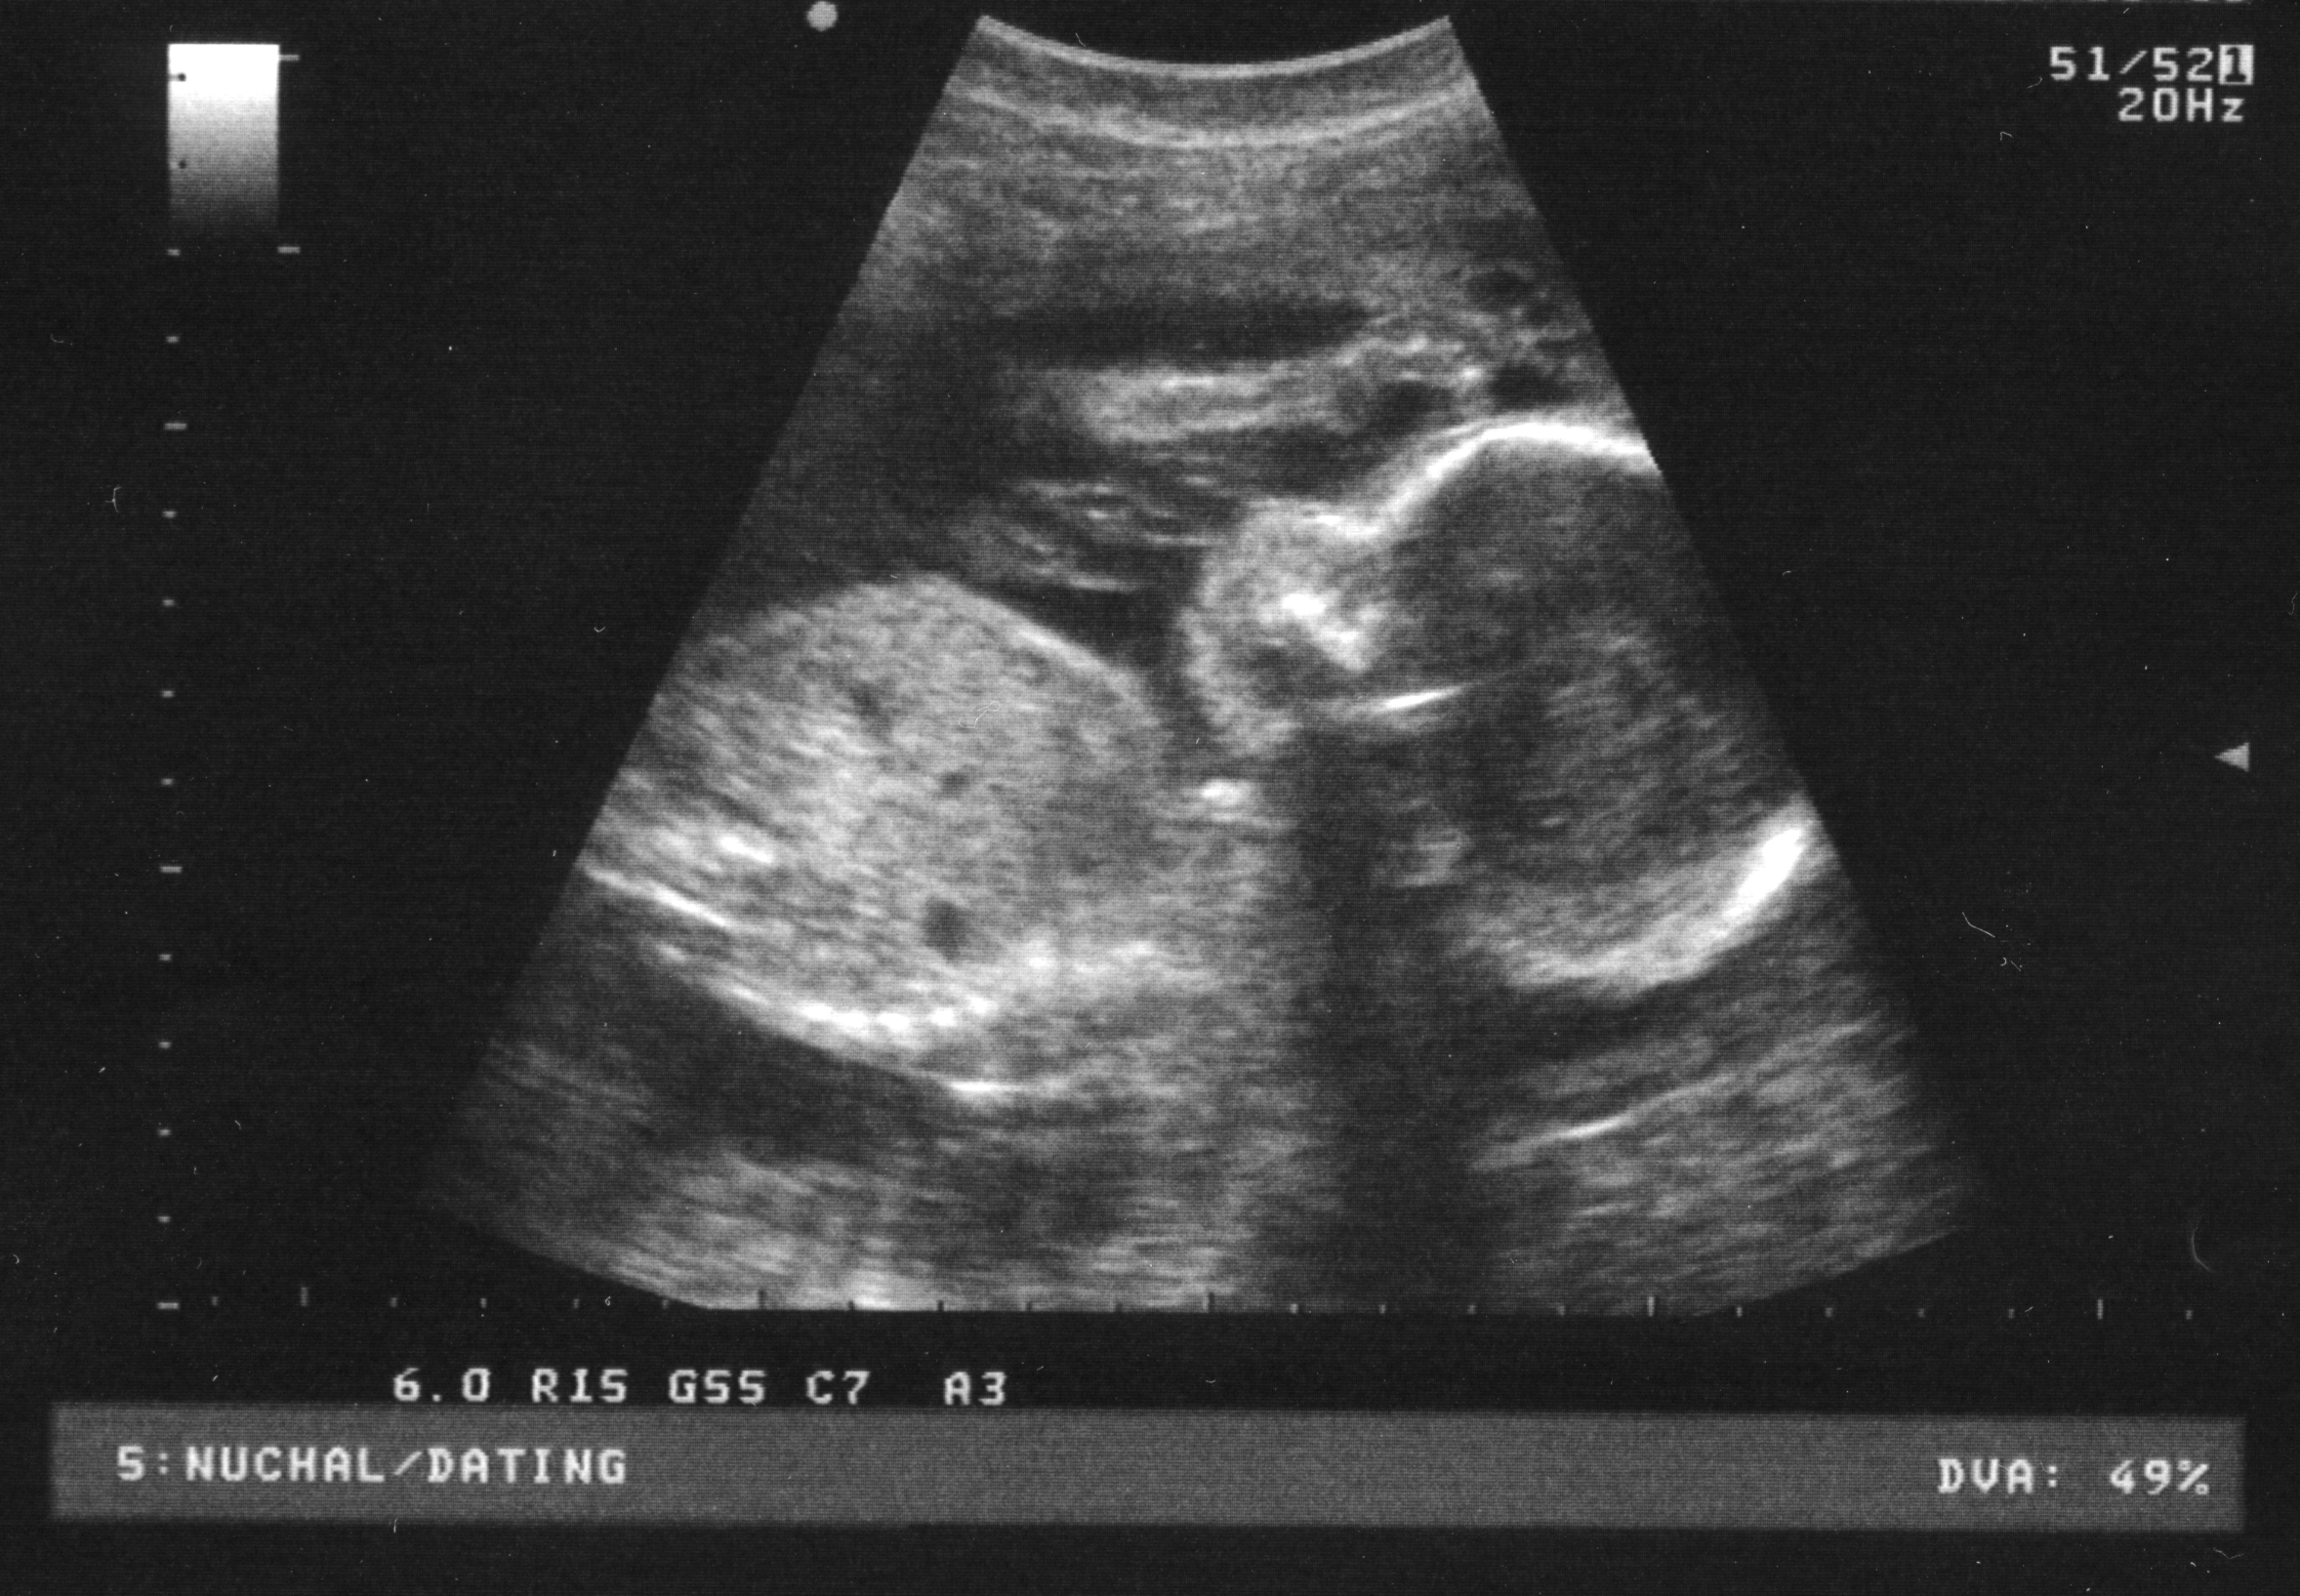 Twin babies ultrasound image.